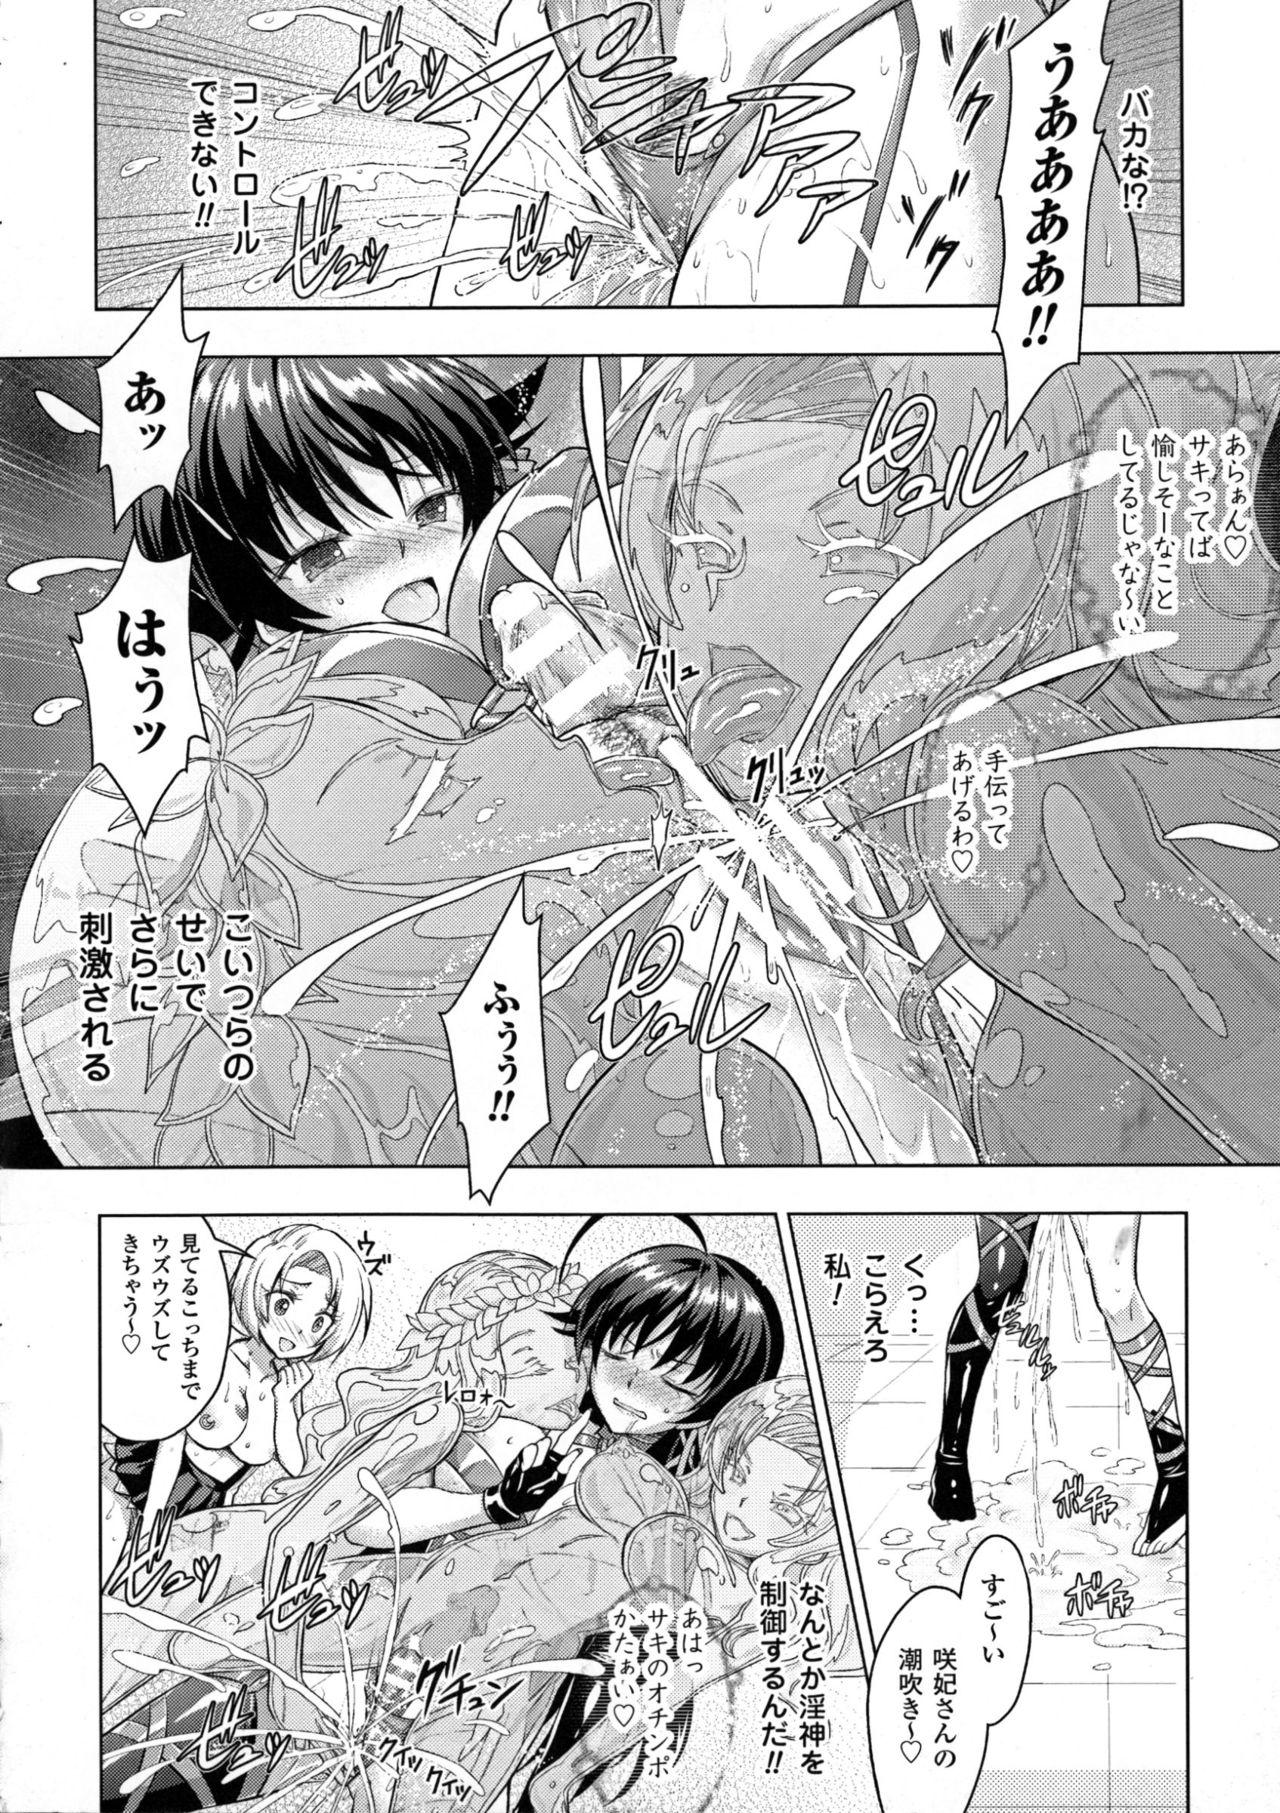 Seigi no Heroine Kangoku File DX Vol. 7 117